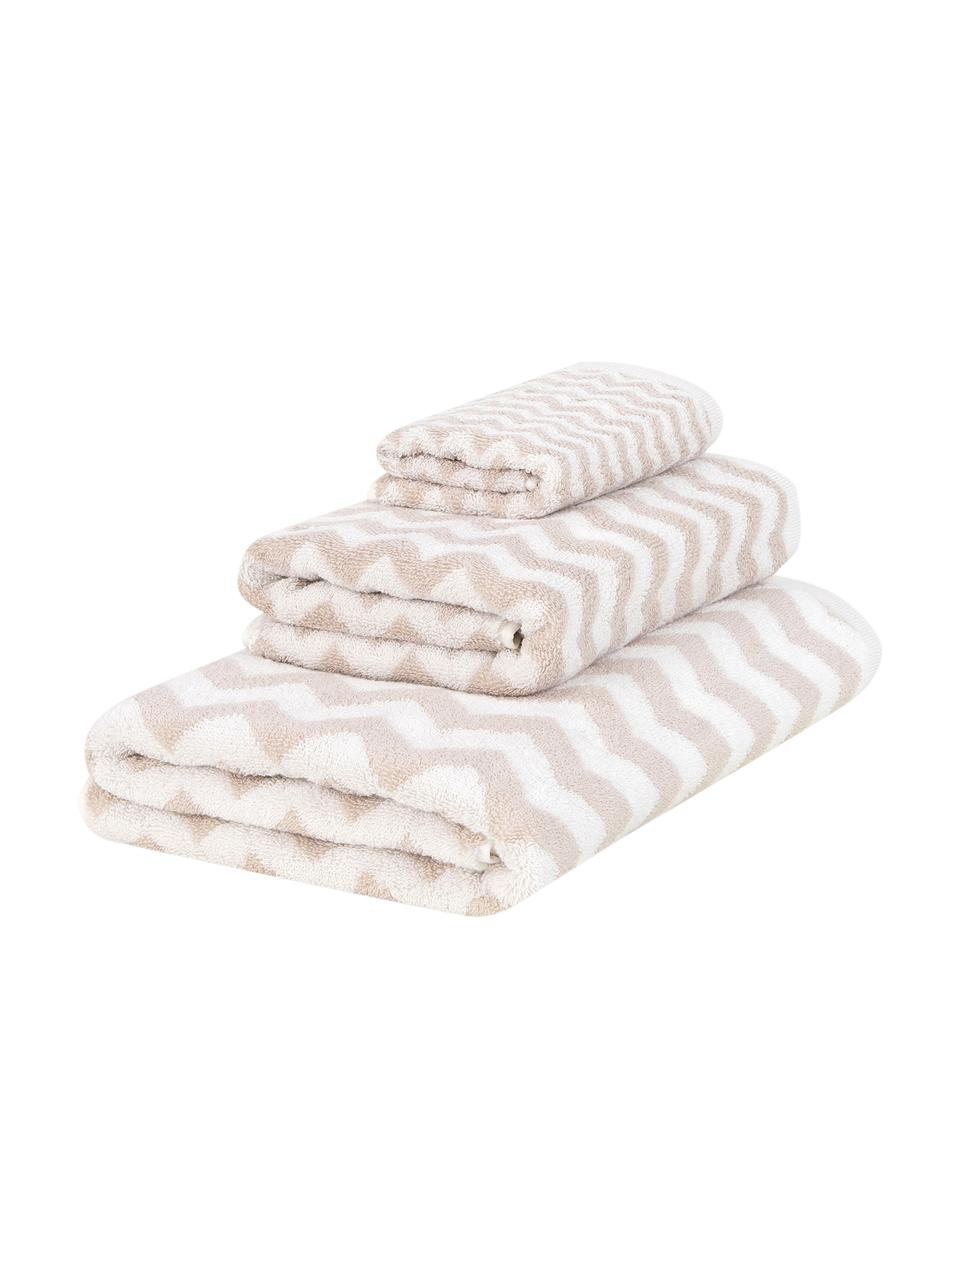 Sada ručníků s klikatým vzorem Liv, 3 díly, Odstíny písku, krémově bílá, vzor, Sada s různými velikostmi